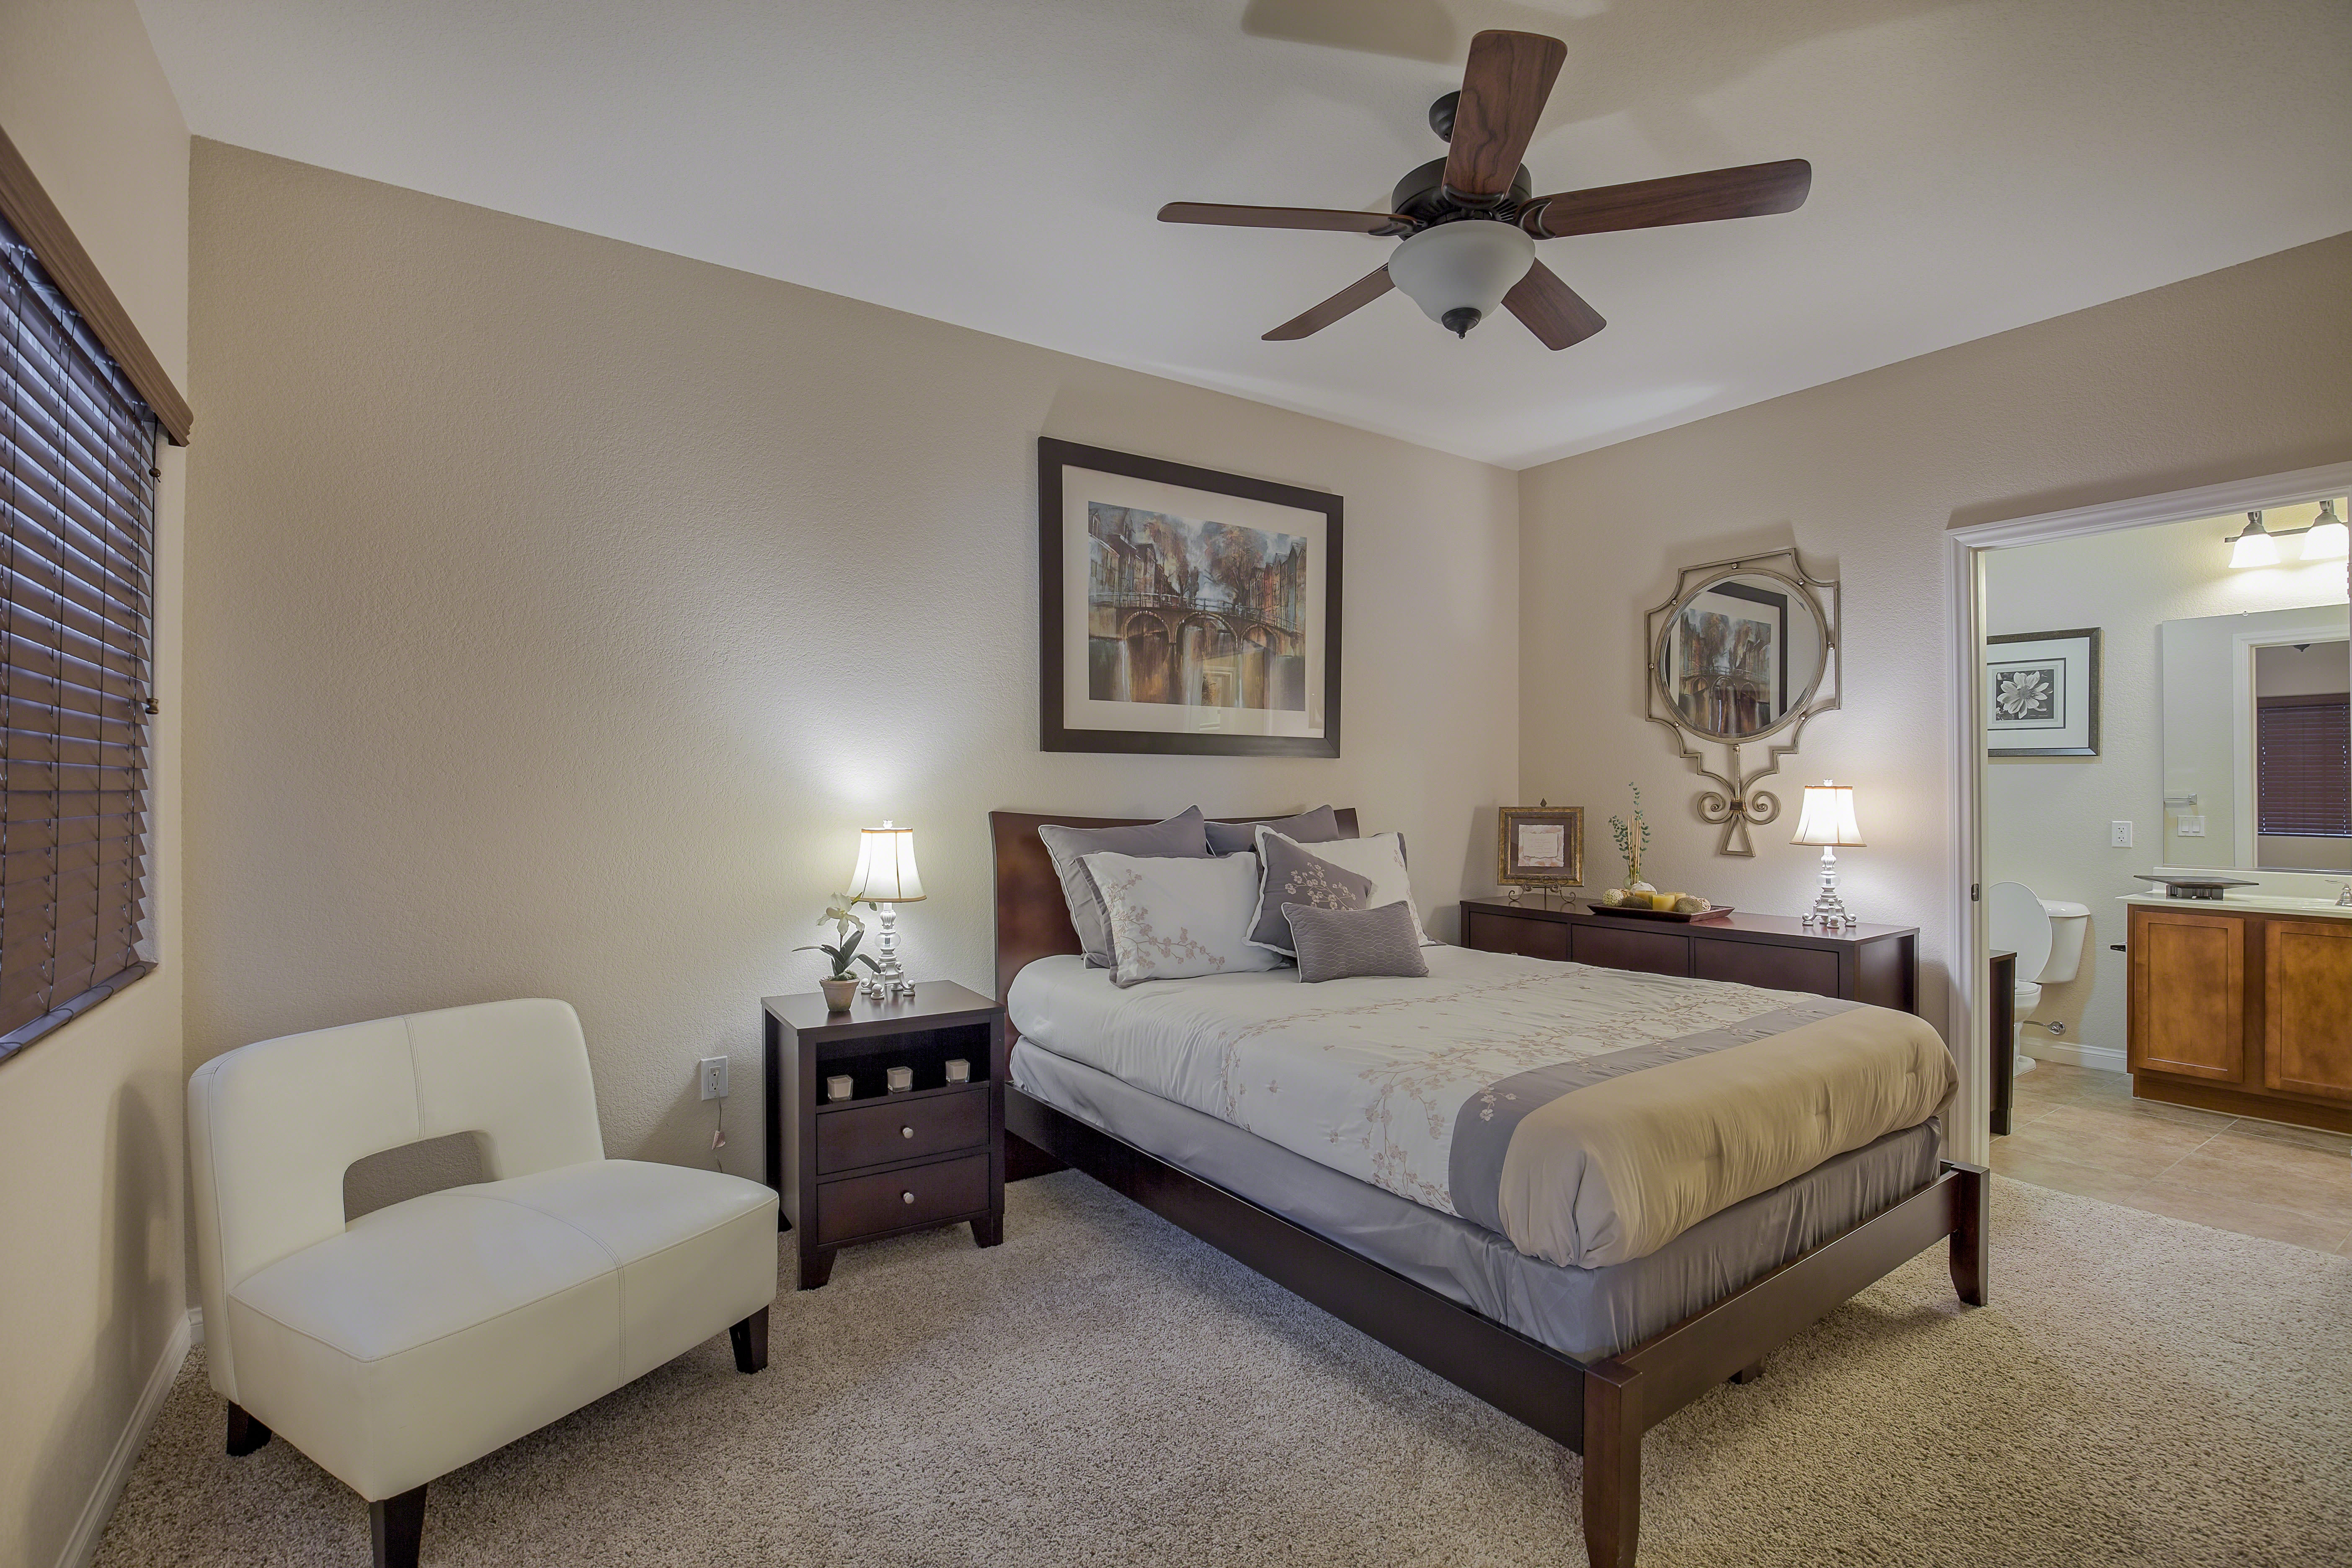 Bedroom with ceiling fan at  Miraflores Apartments in El Centro, California